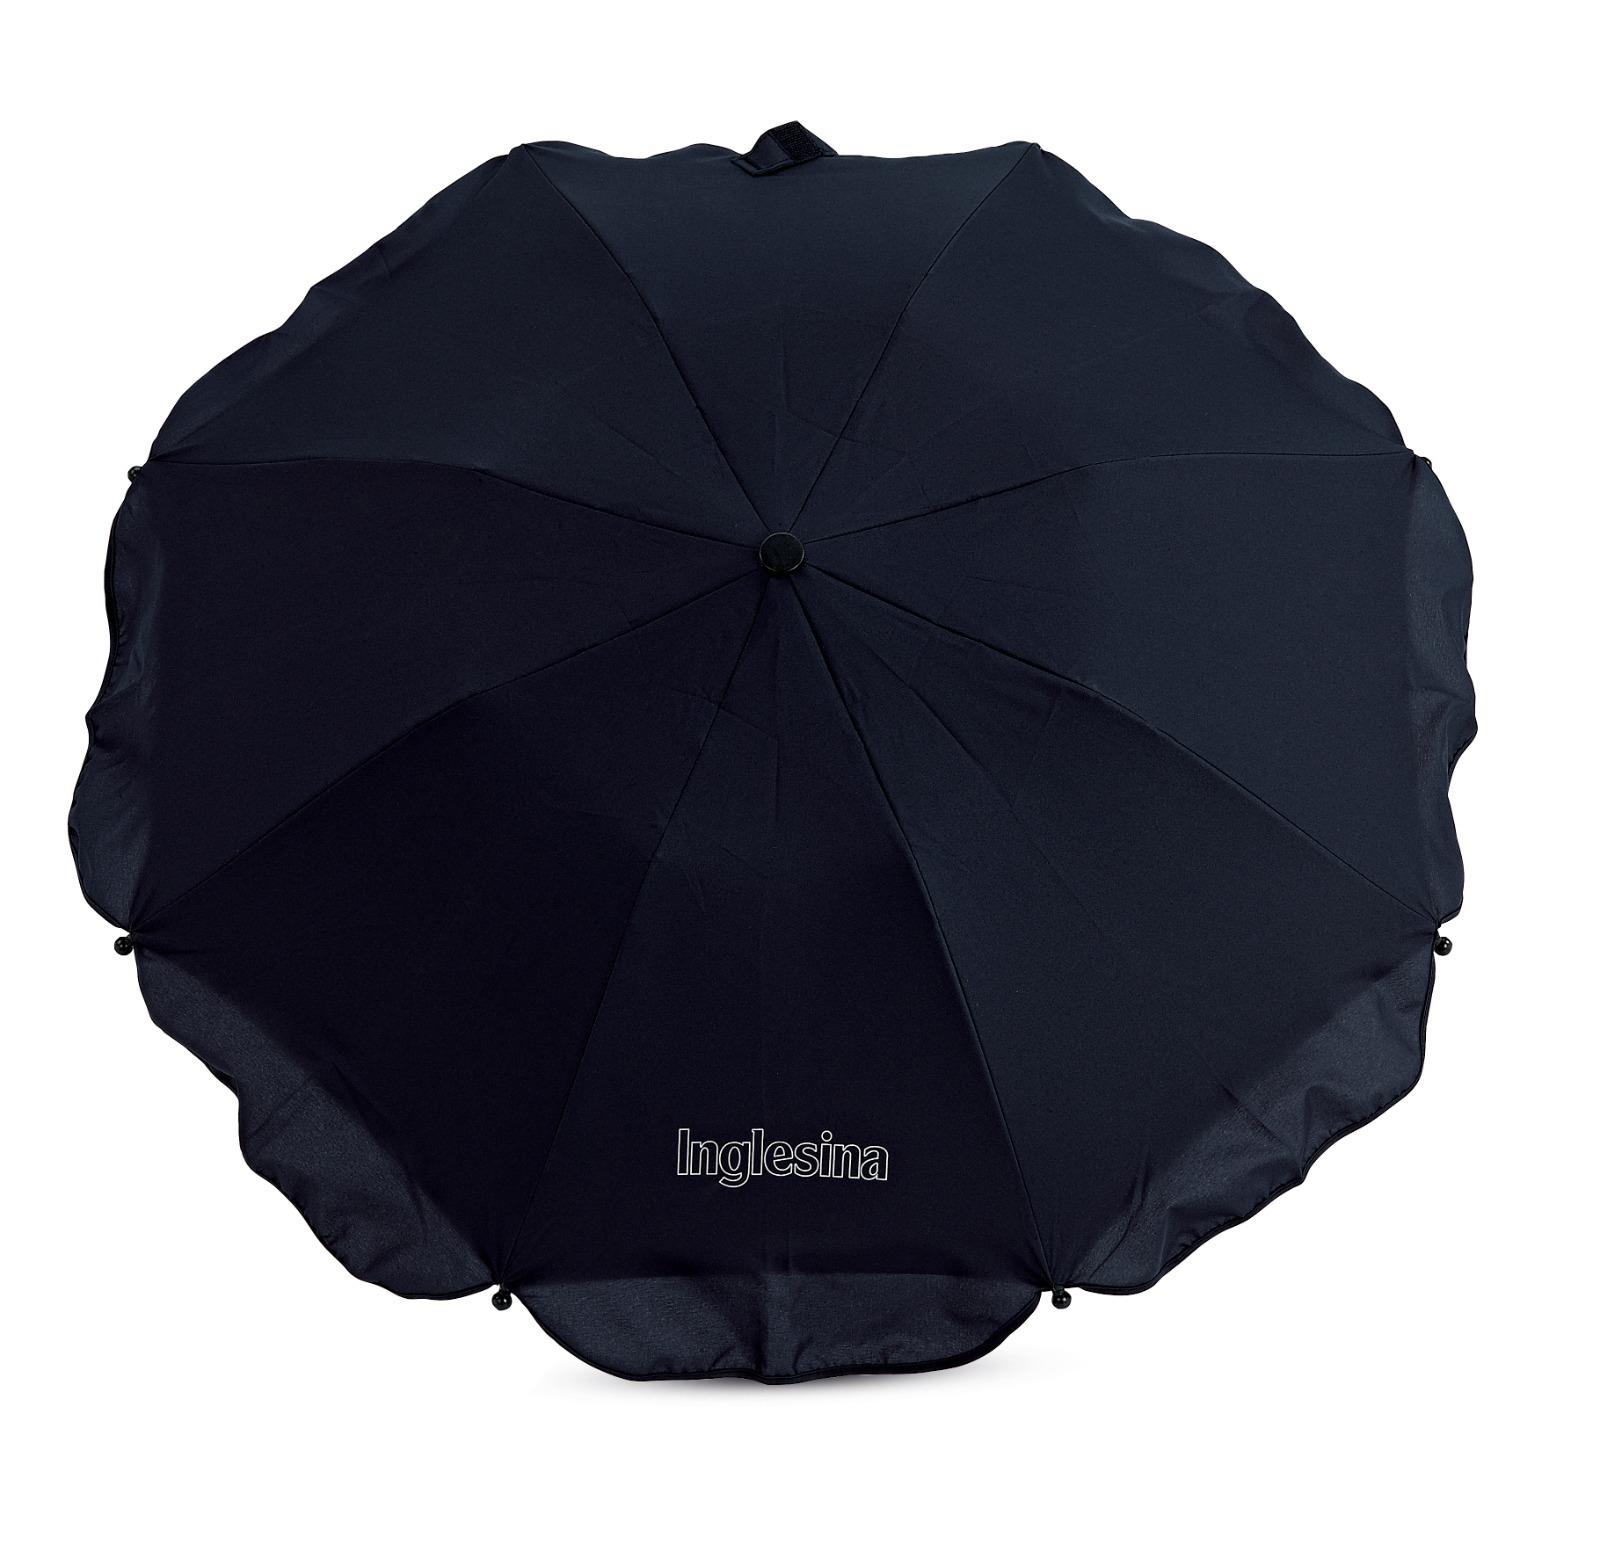 Inglesina Şemsiye Parasol - Black